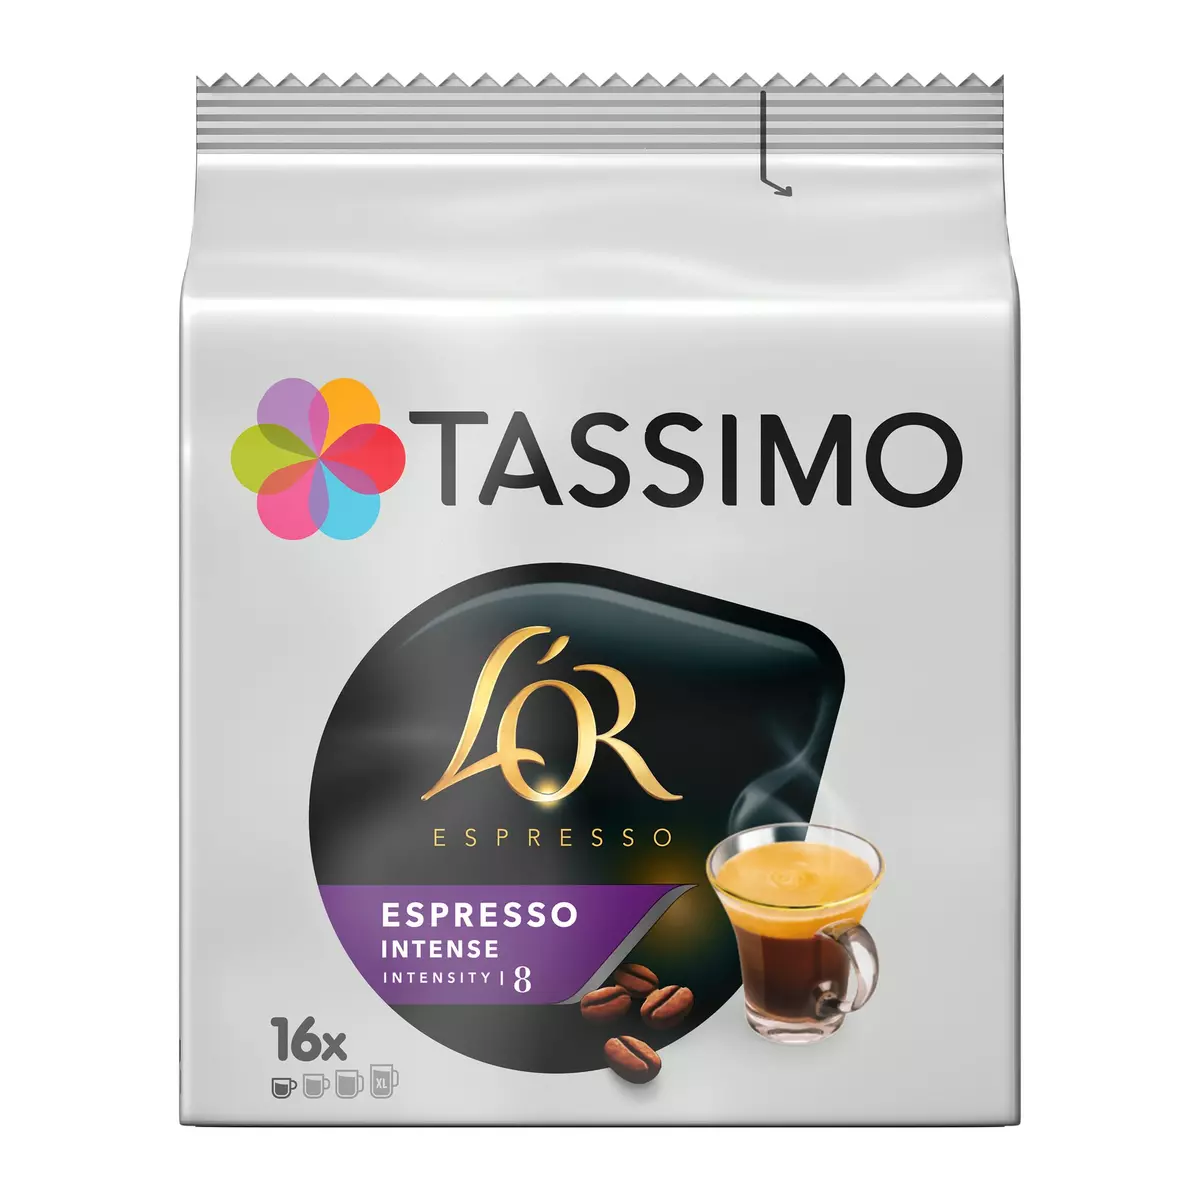 TASSIMO Dosettes de café L'Or Espresso intensité 8 16 dosettes 118g